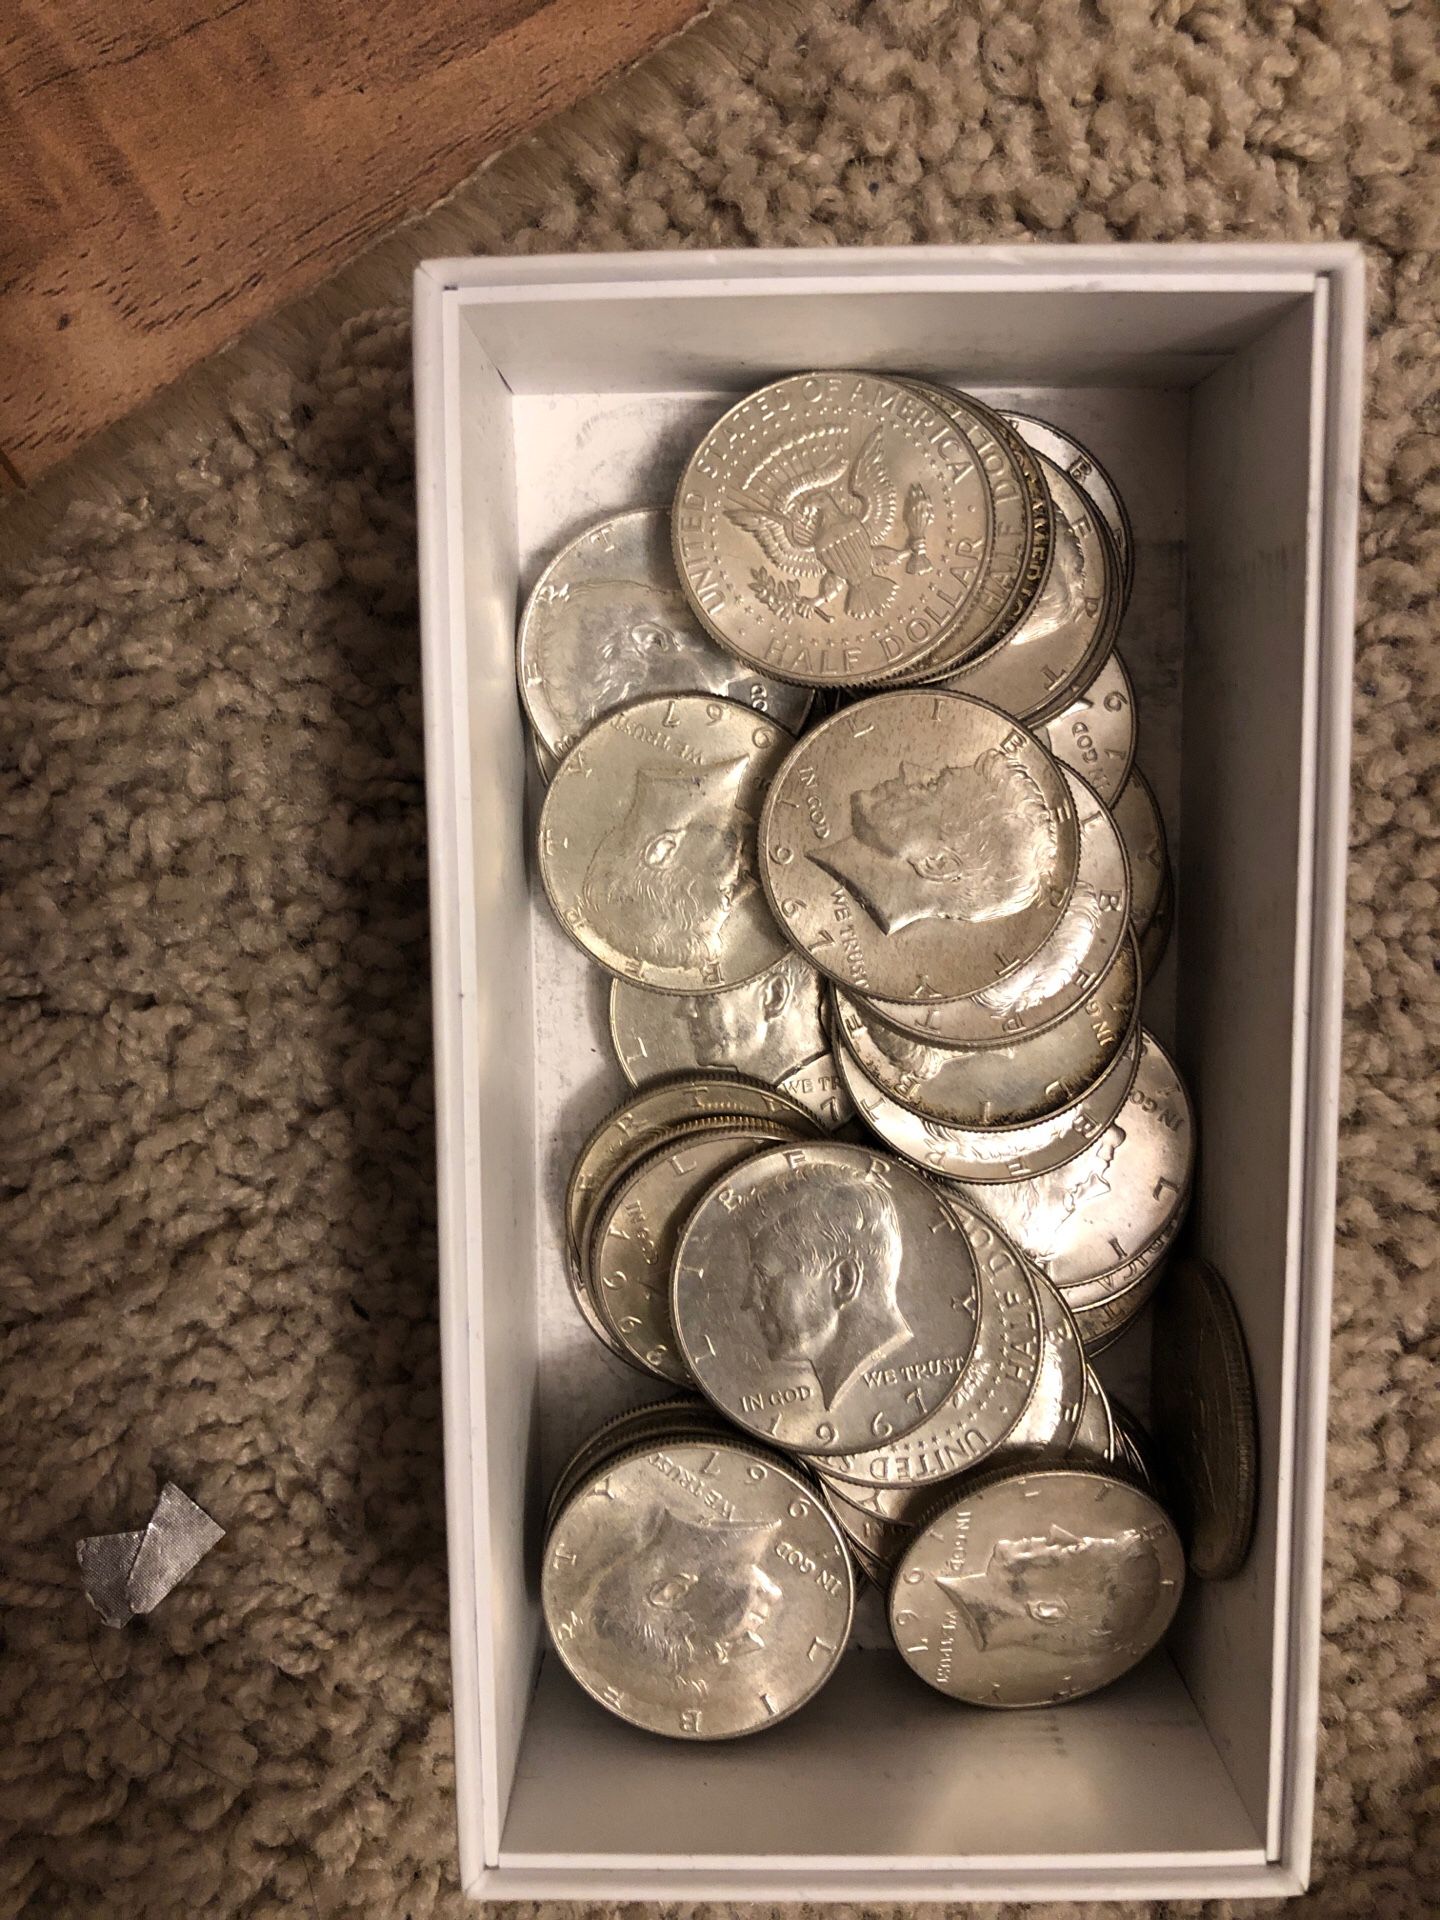 Over 50 1965 to 1969 JFK silver half dollars